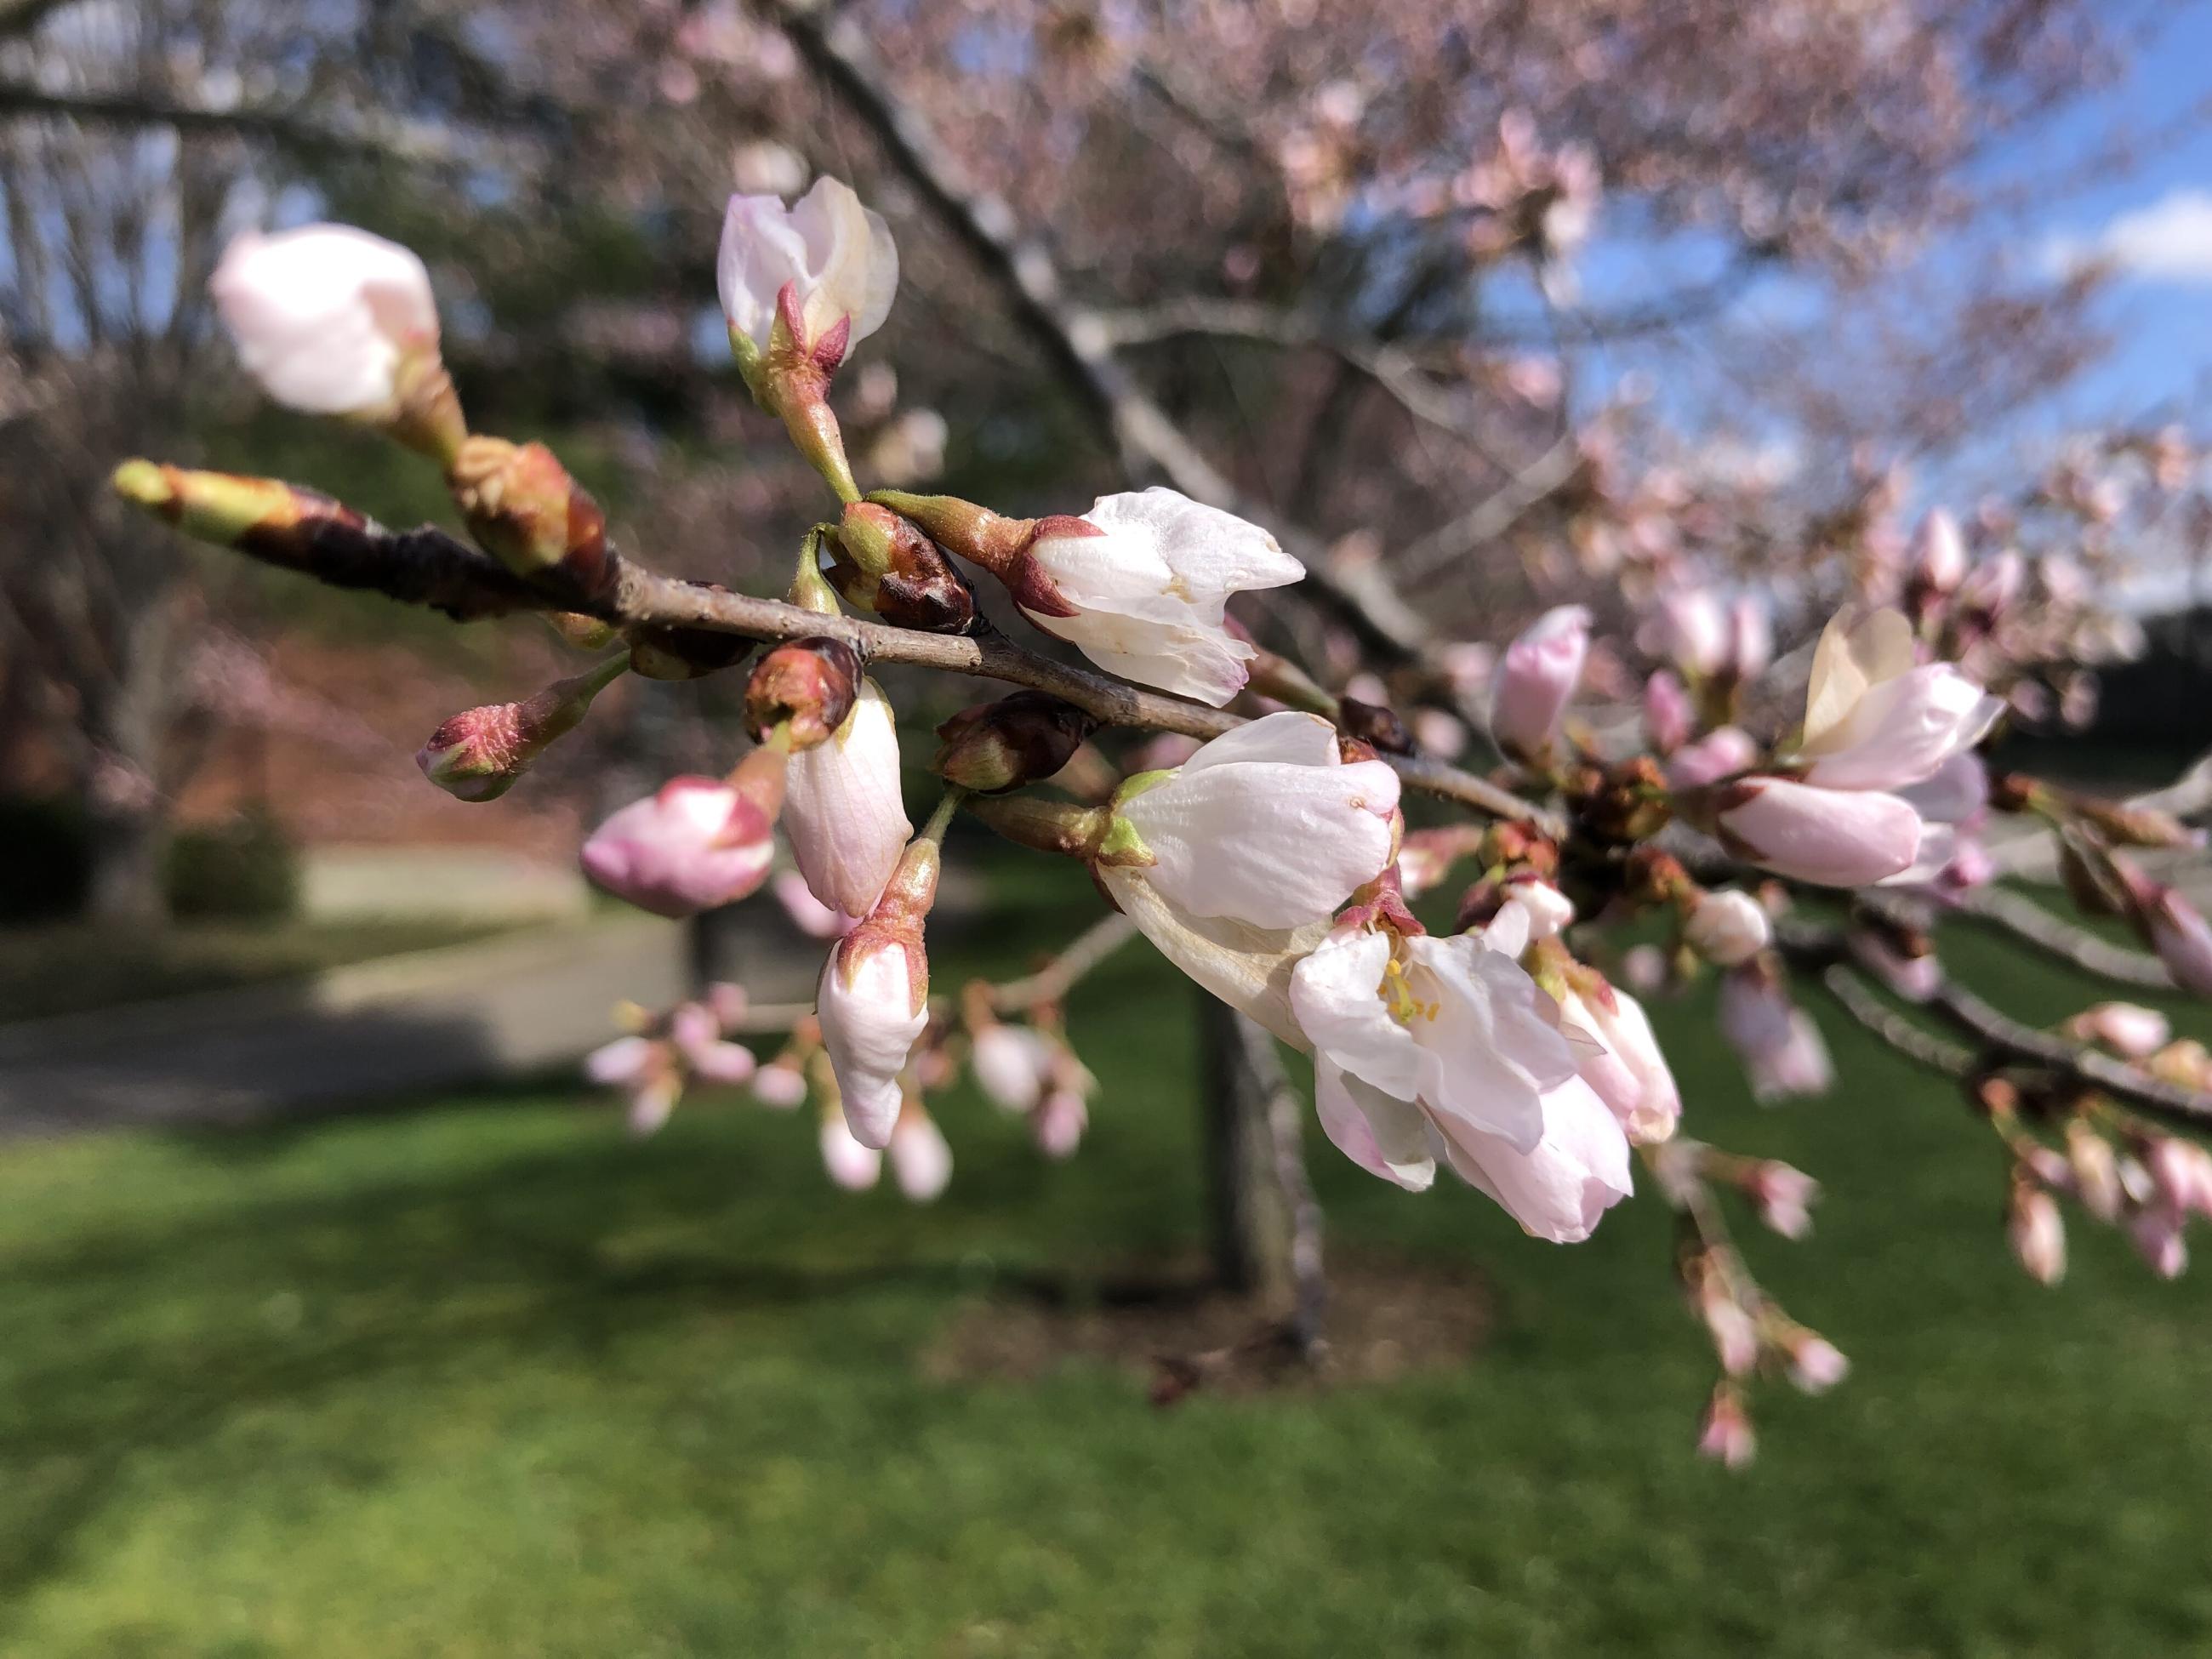 Up close cherry tree blossoms along the bike path